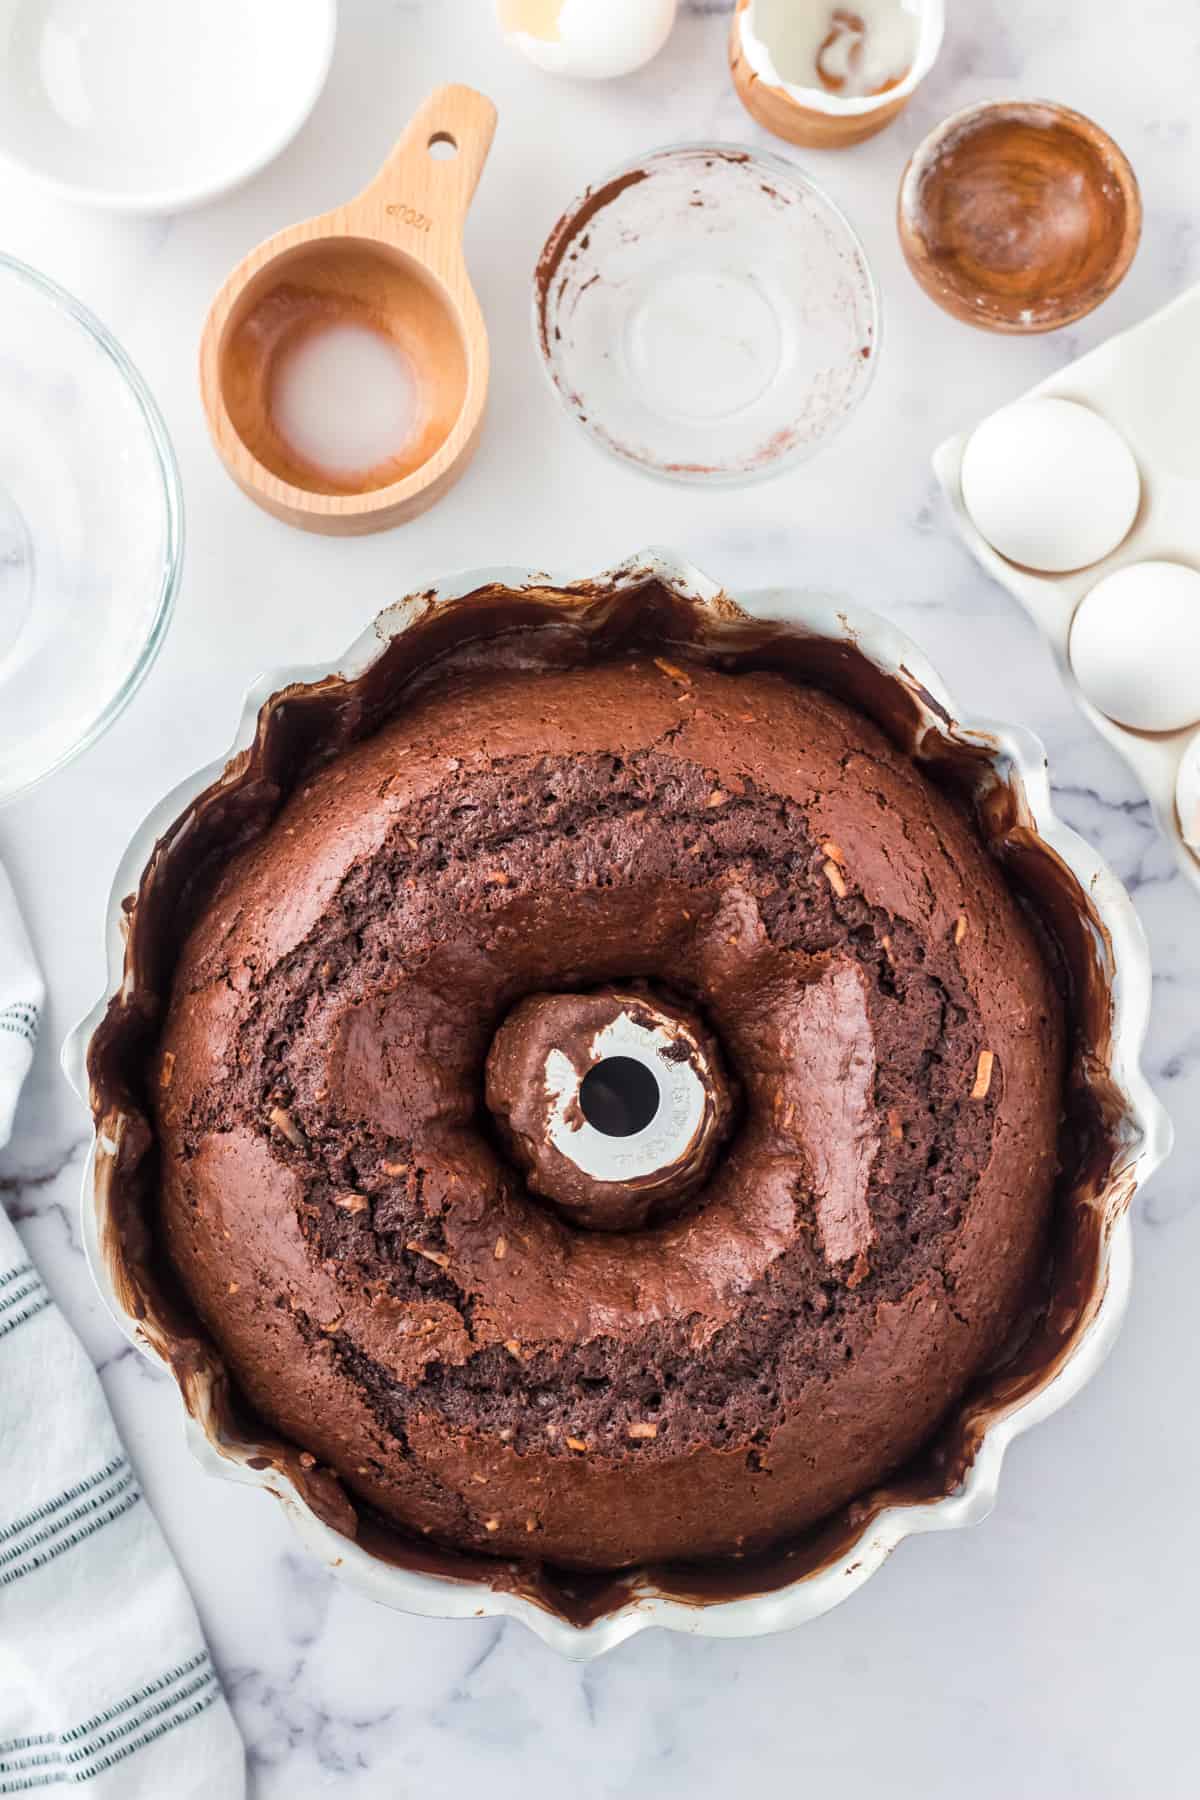 Homemade chocolate coconut cake in bundt cake pan.